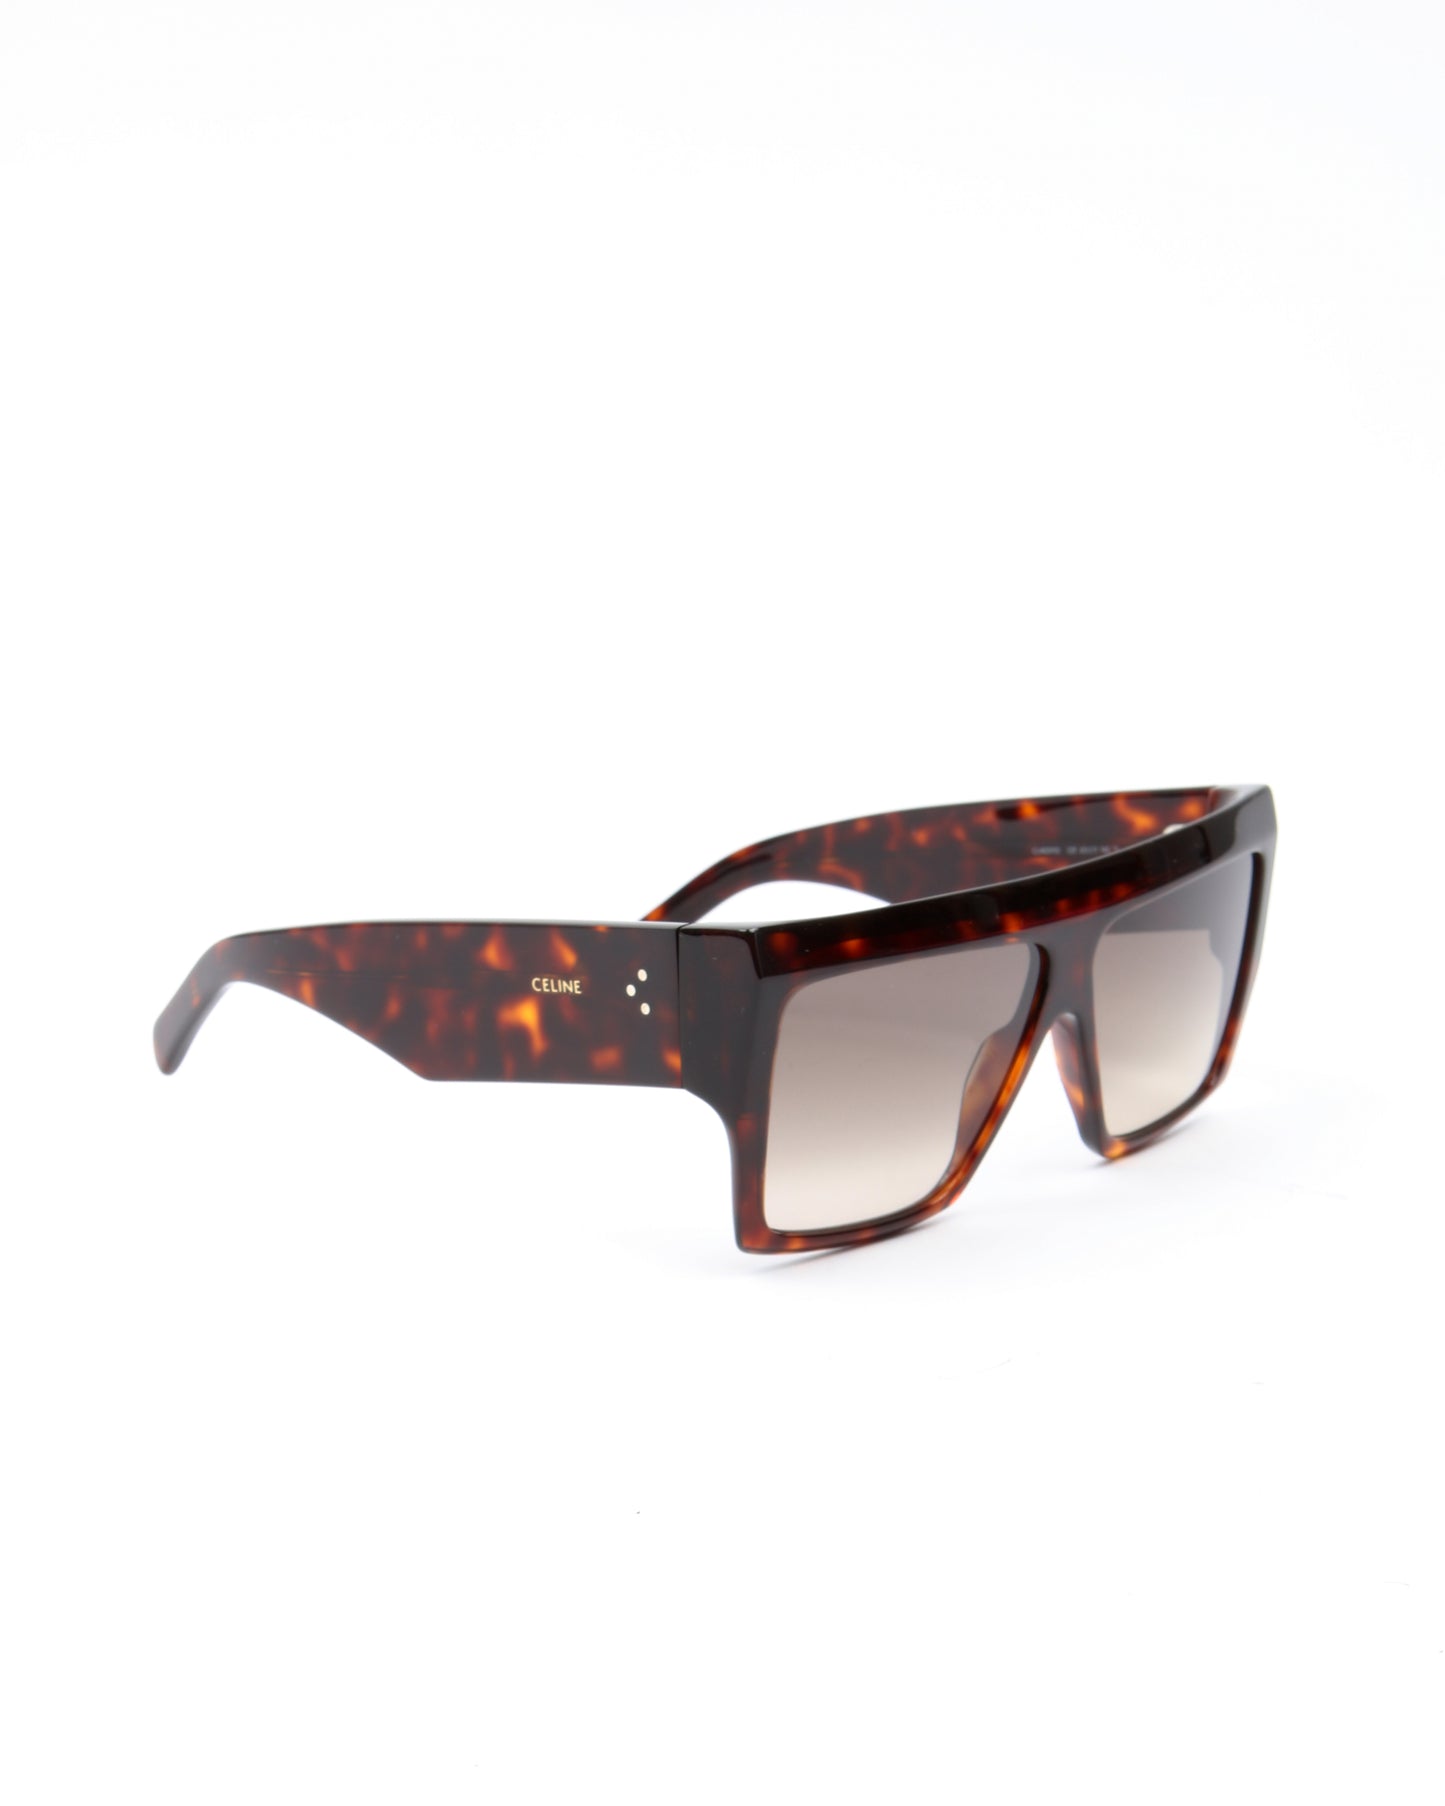 Celine Brown Tortoise Square CL400921 Sunglasses